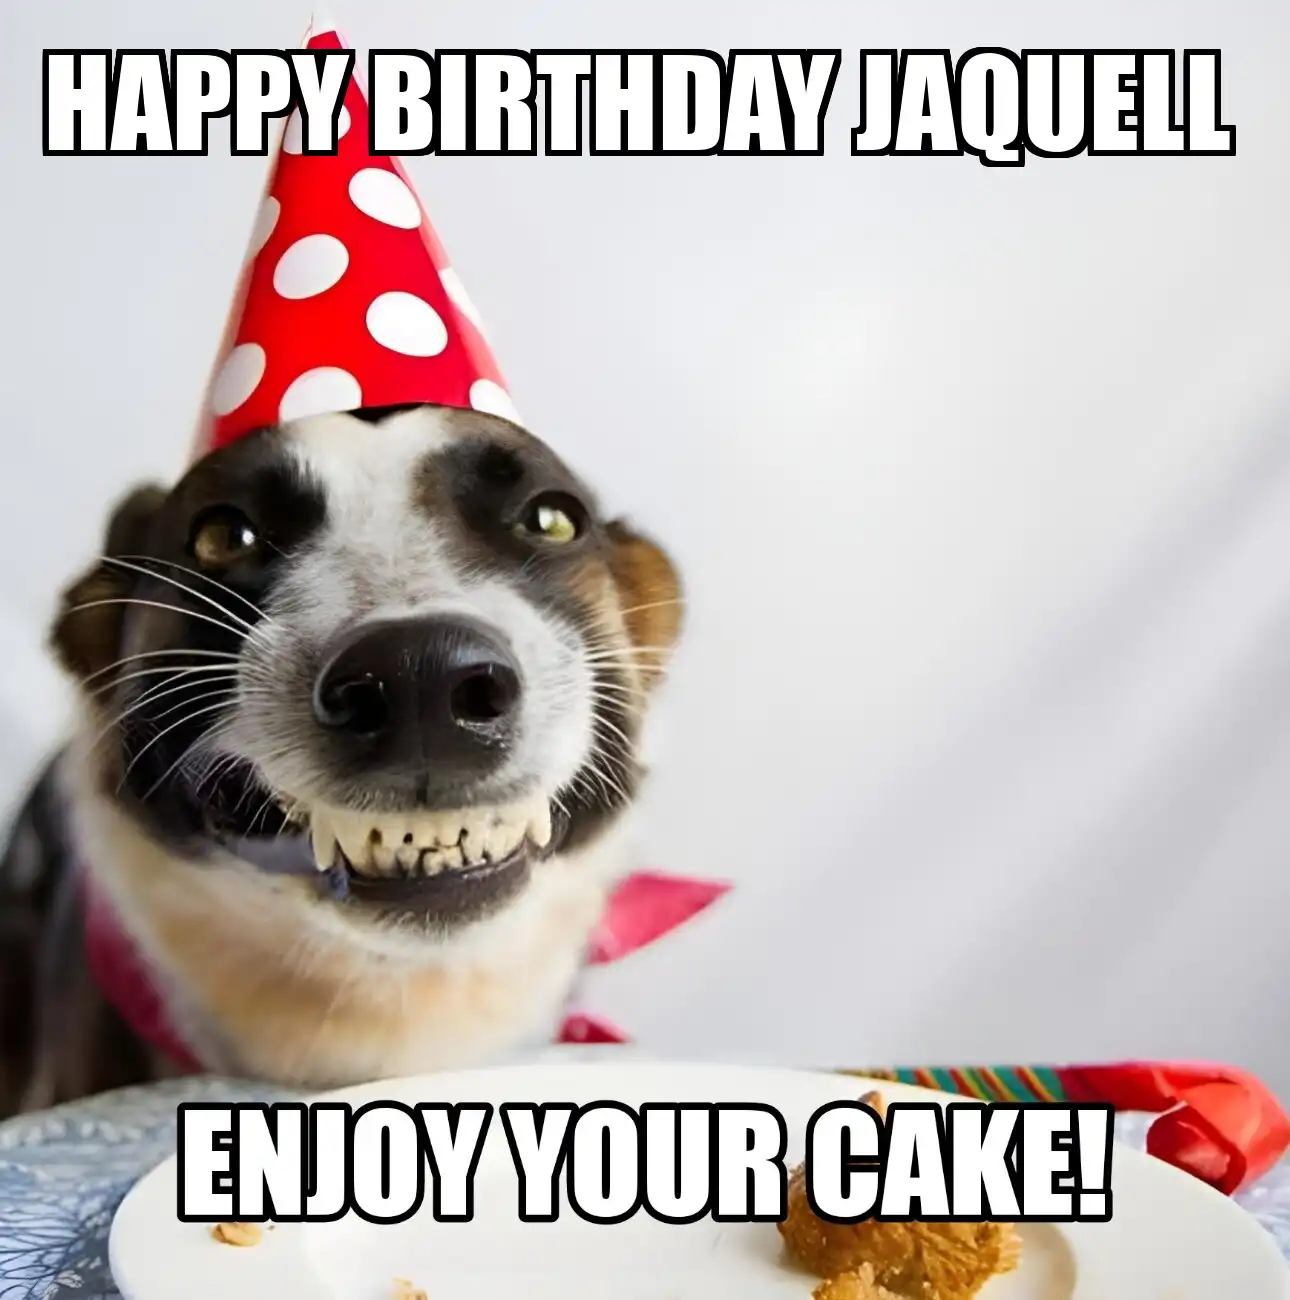 Happy Birthday Jaquell Enjoy Your Cake Dog Meme